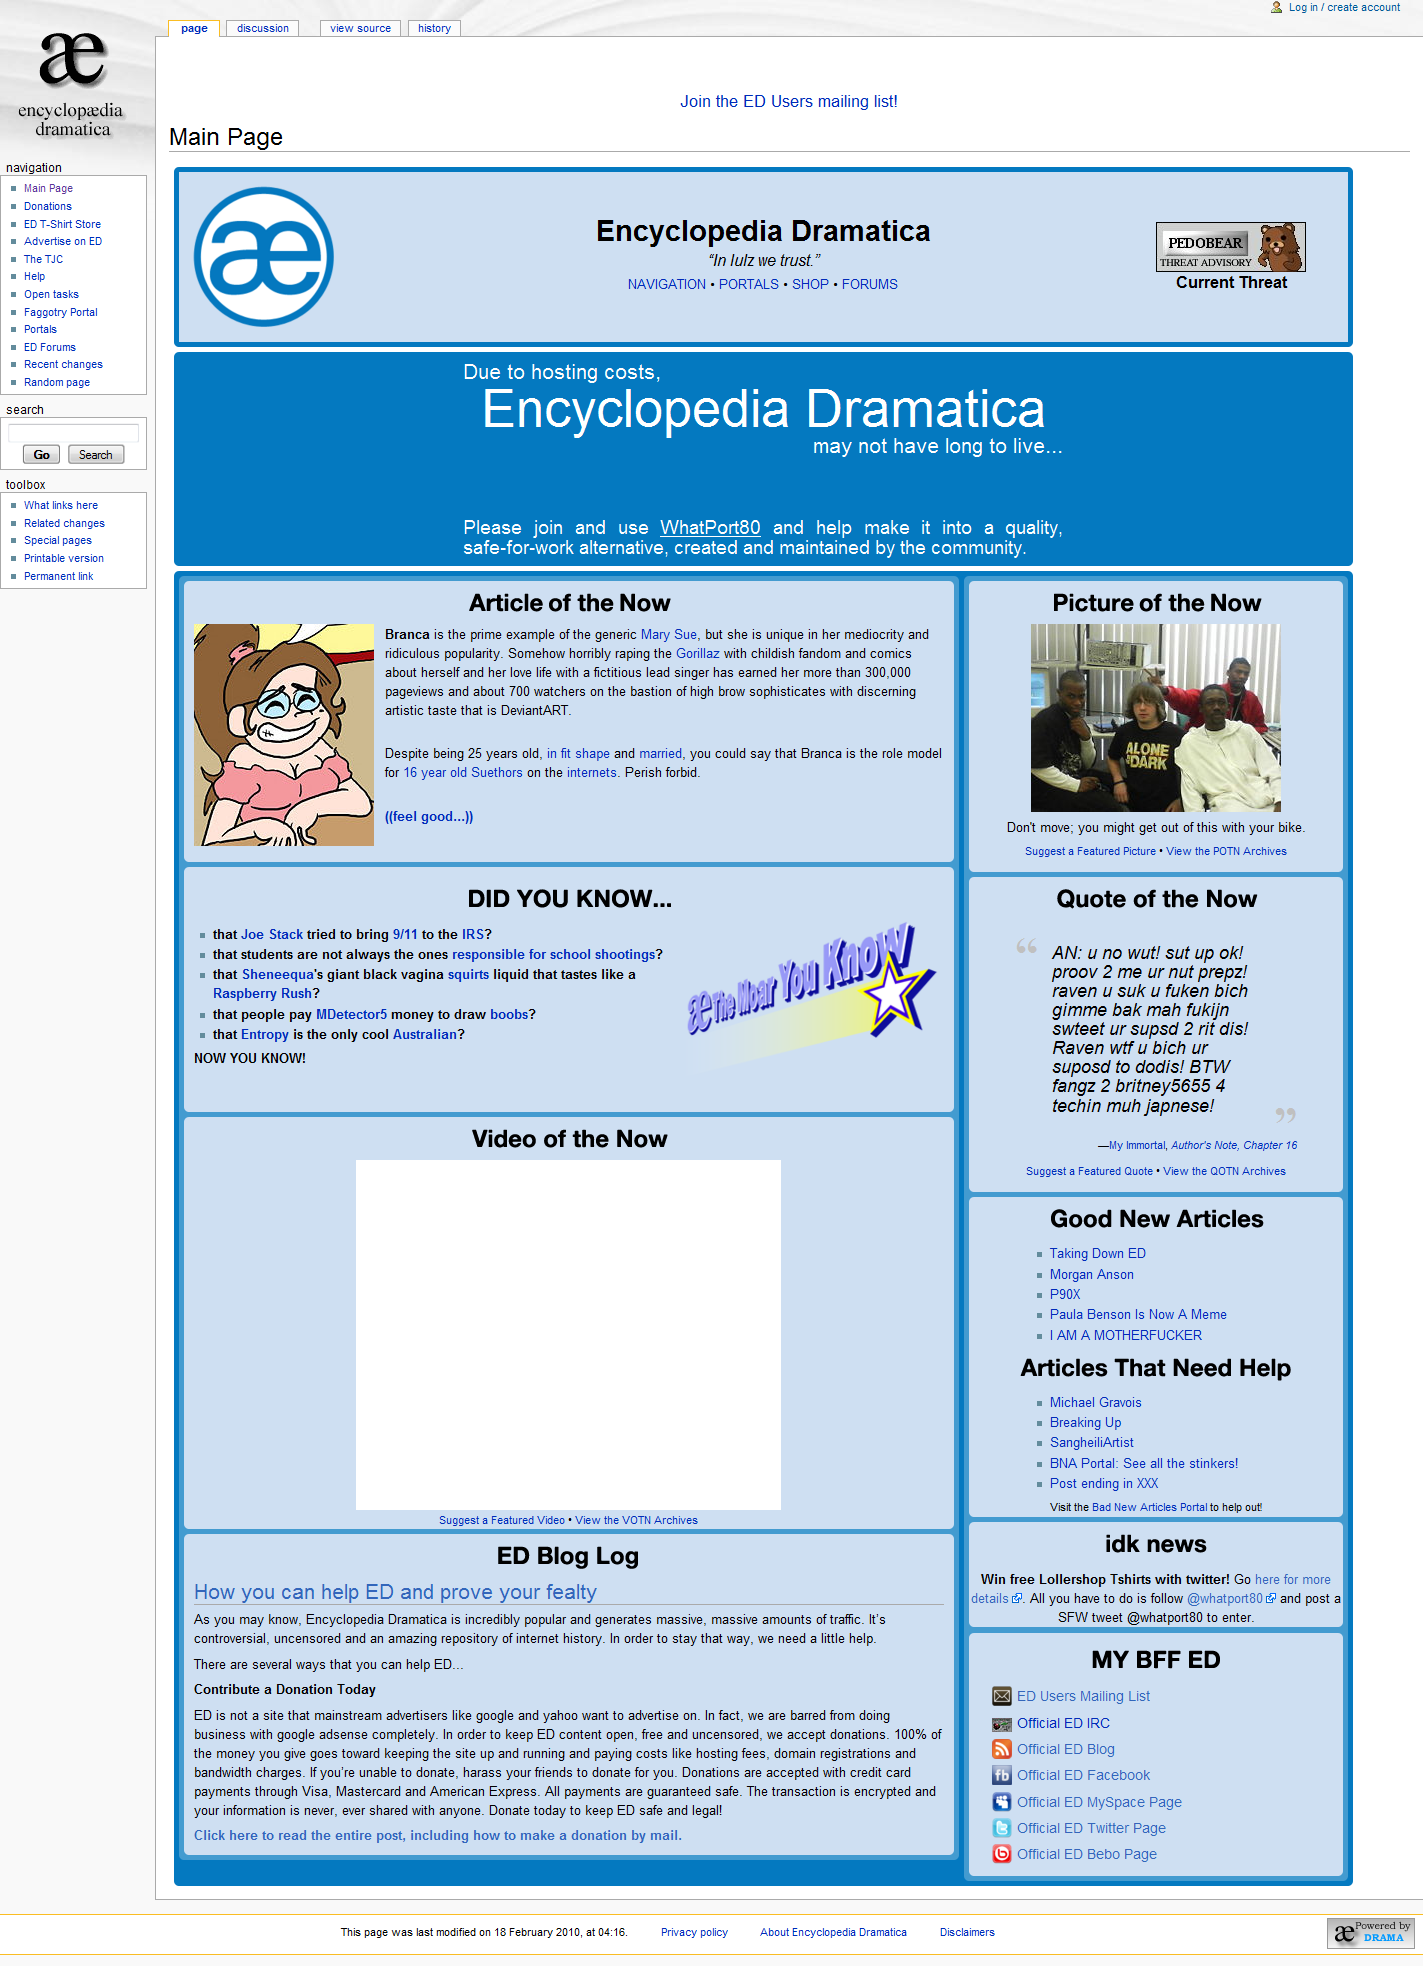 EncyclopediaDramatica.png